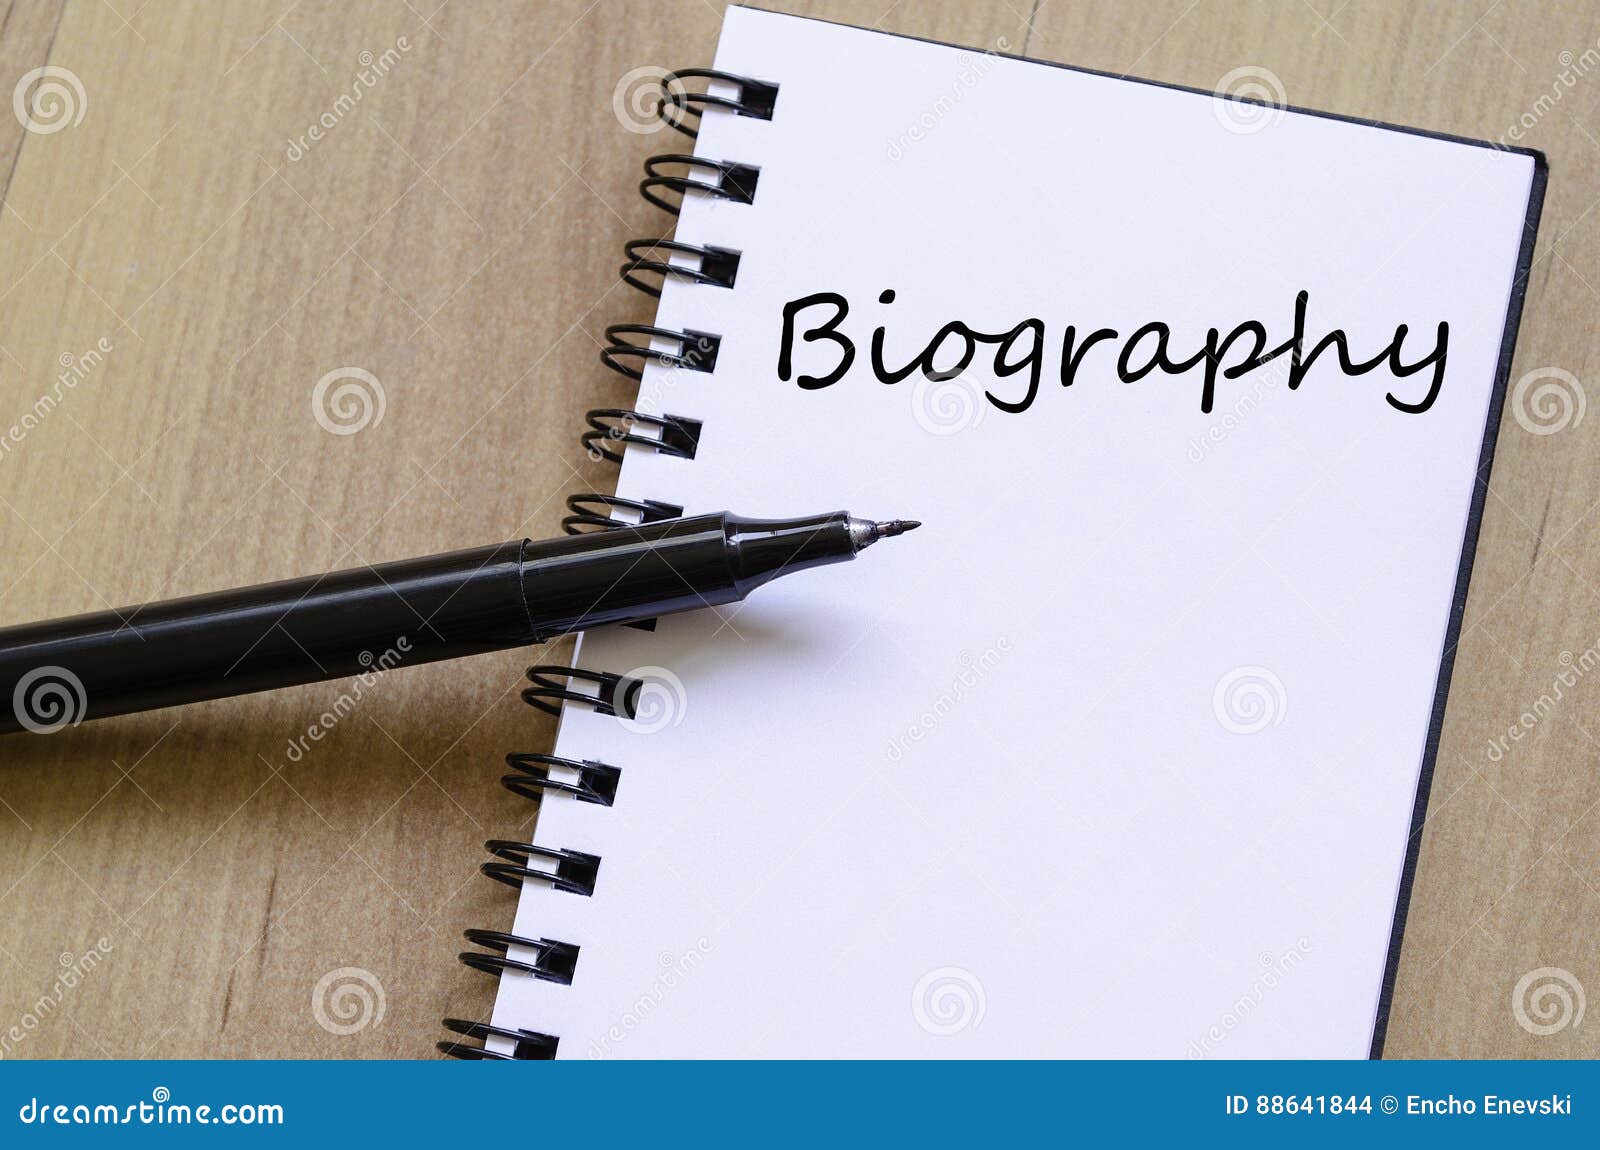 write biography text